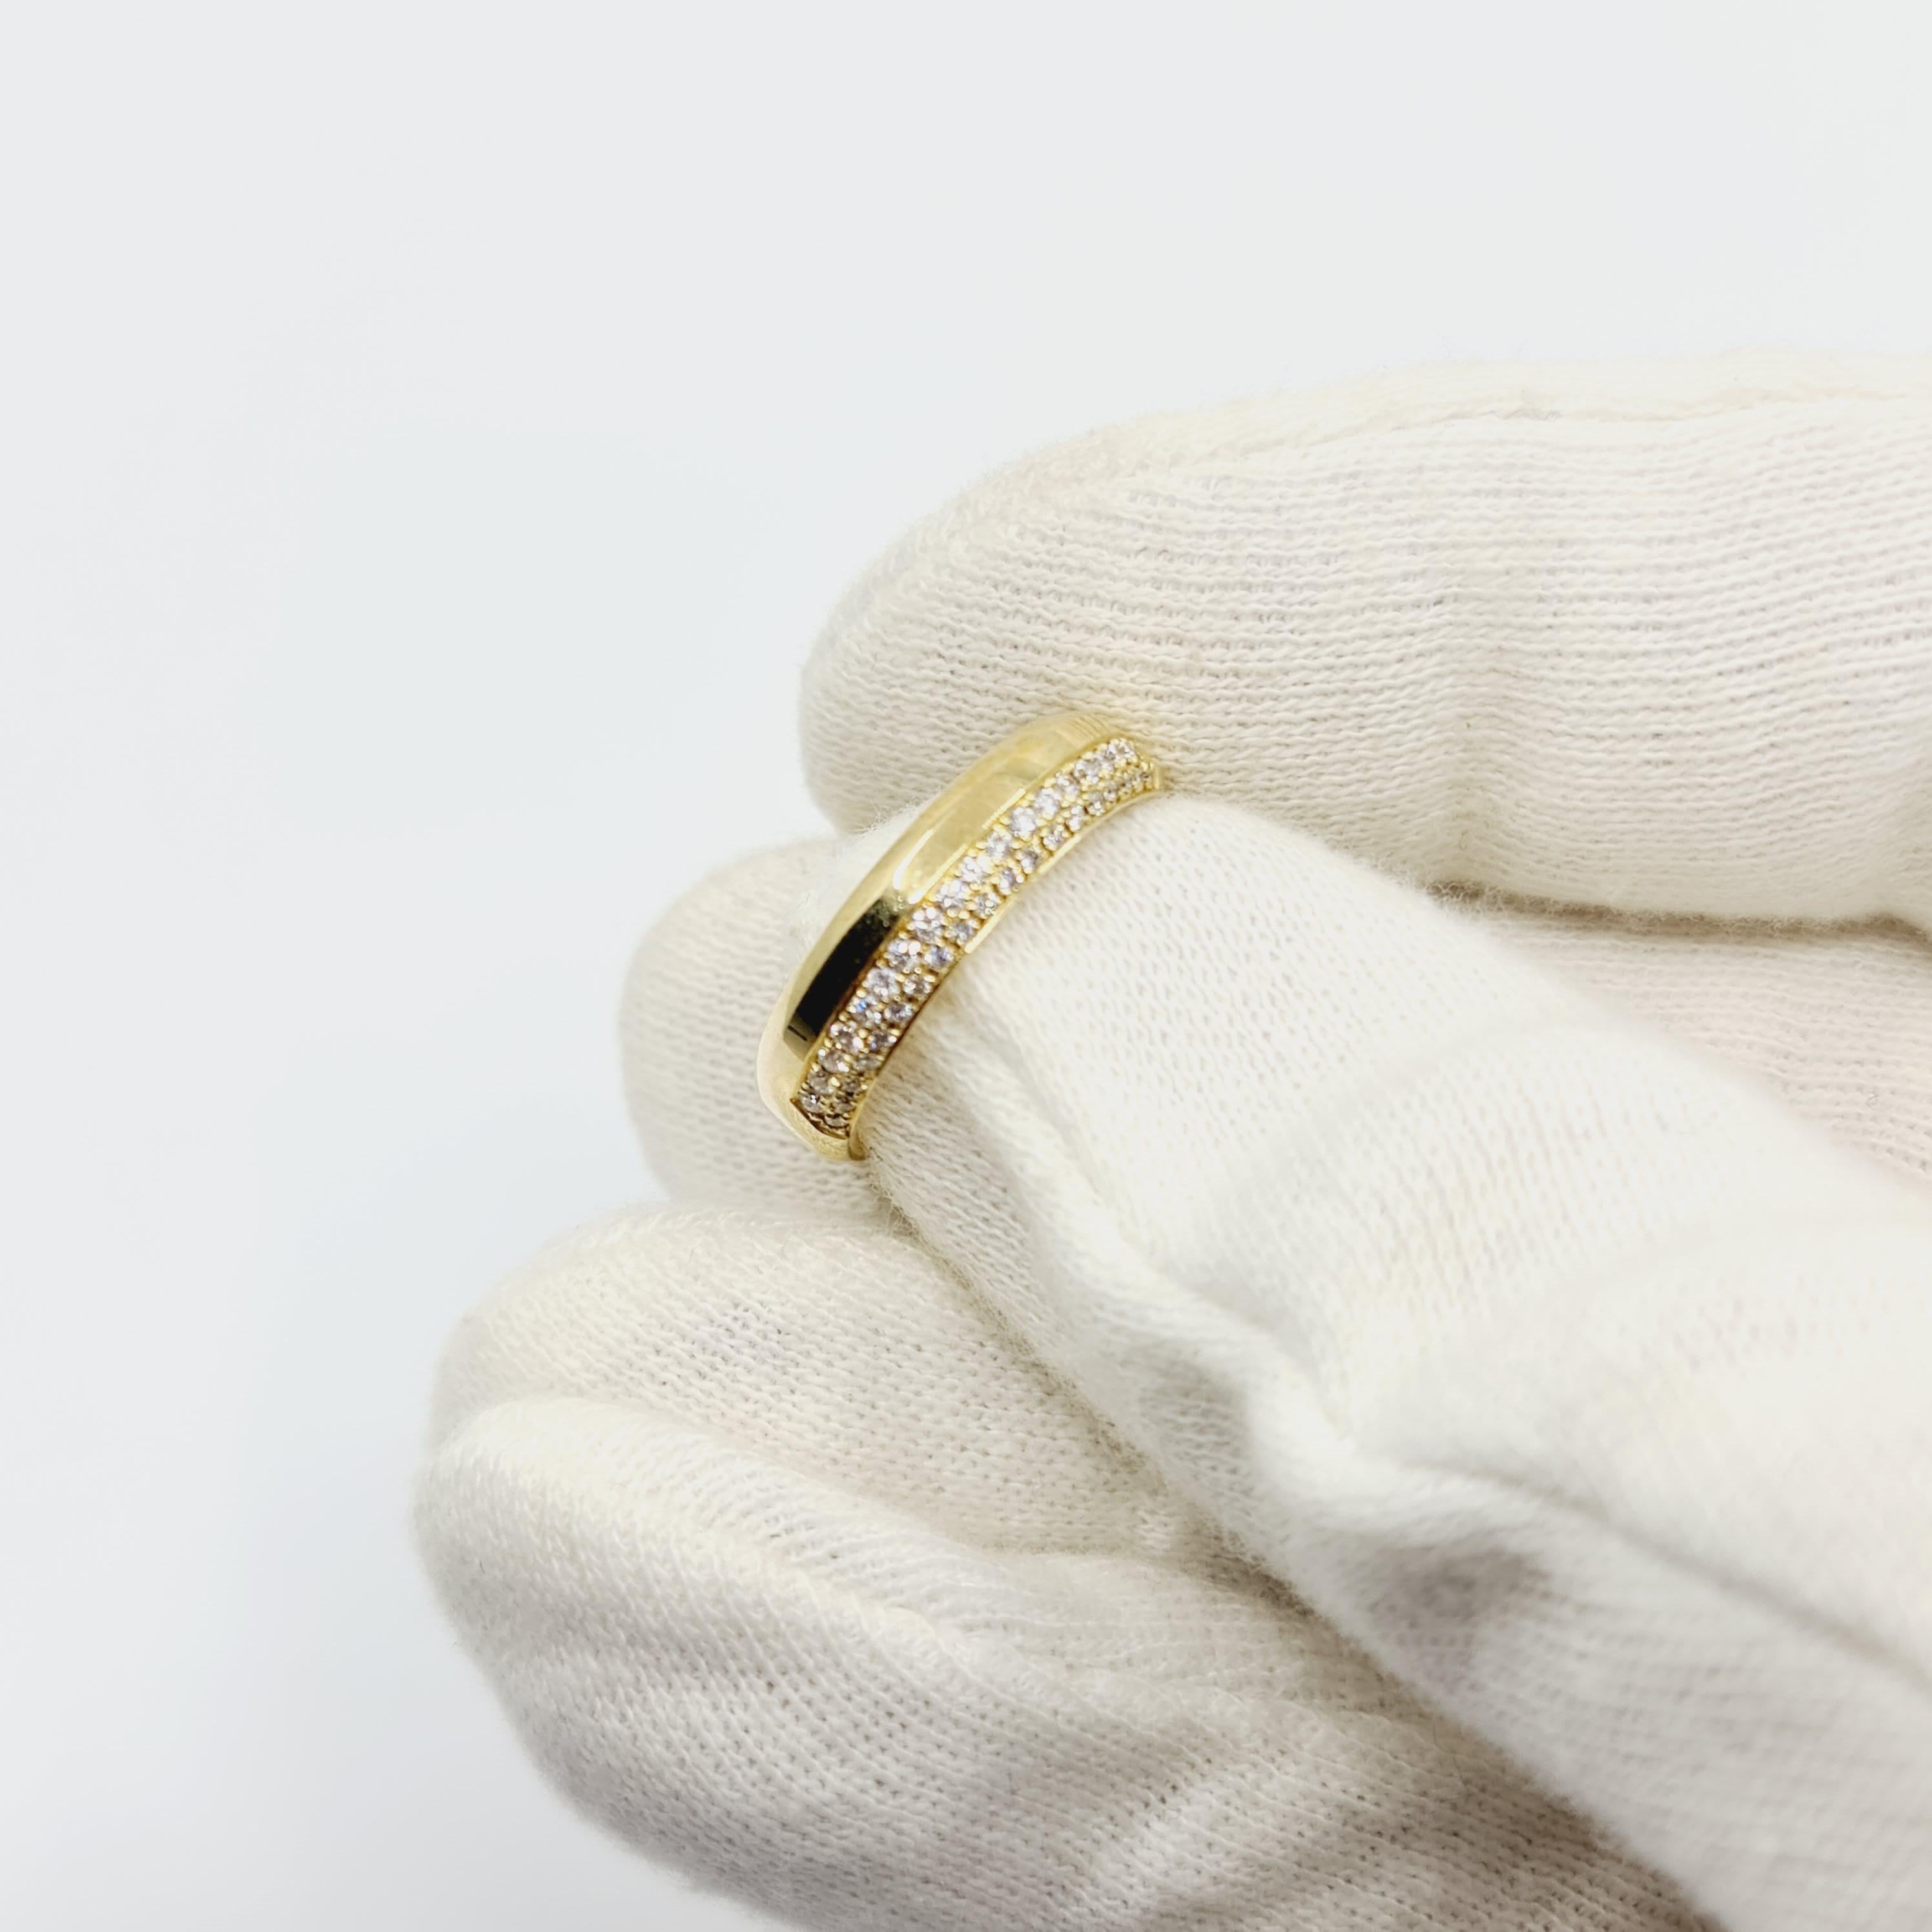 0.285 Carat Diamond Ring G/VS 14k Gold, Brilliant Cut Pave Diamonds For Sale 3